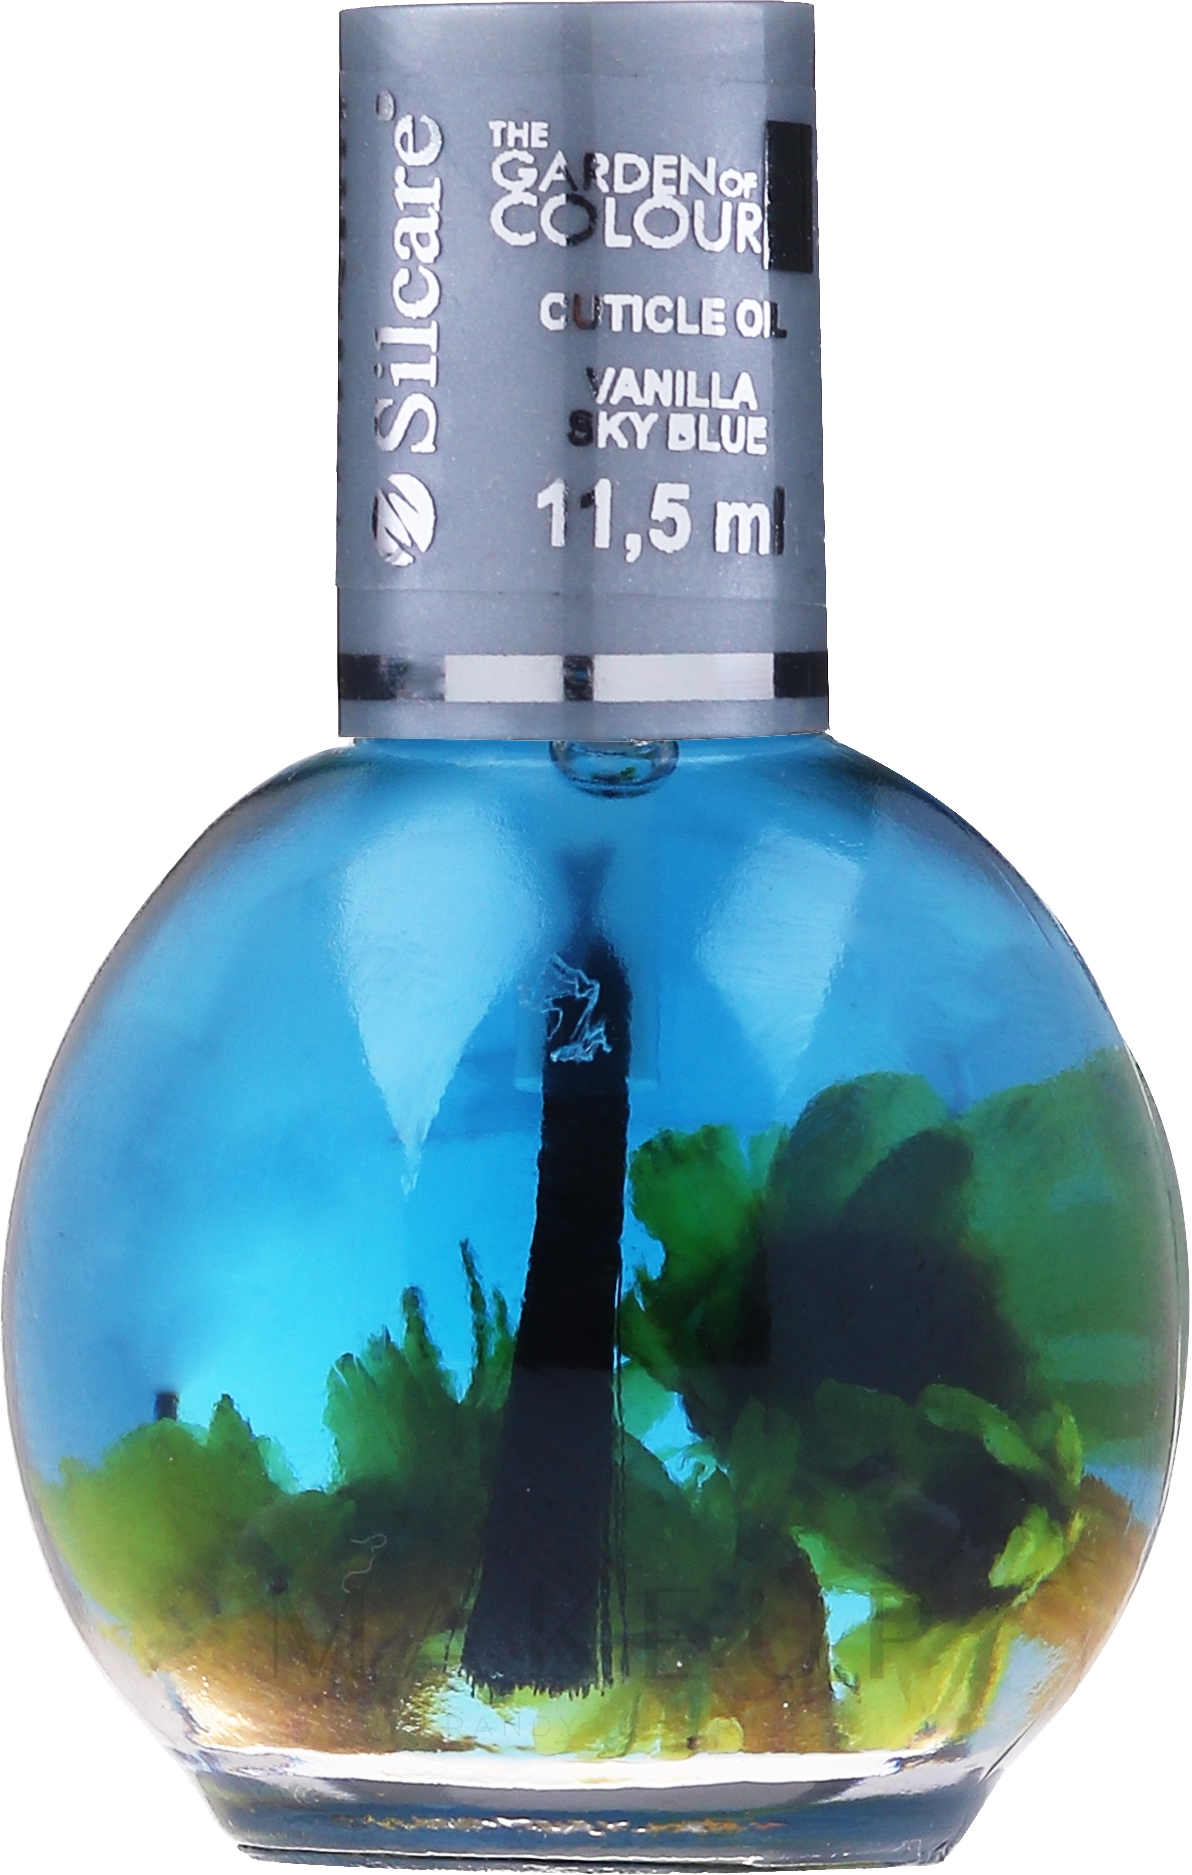 Nagel- und Nagelhautöl himmelblaue Vanille - Silcare The Garden Of Colour Vanilla Sky Blue — Bild 11.5 ml